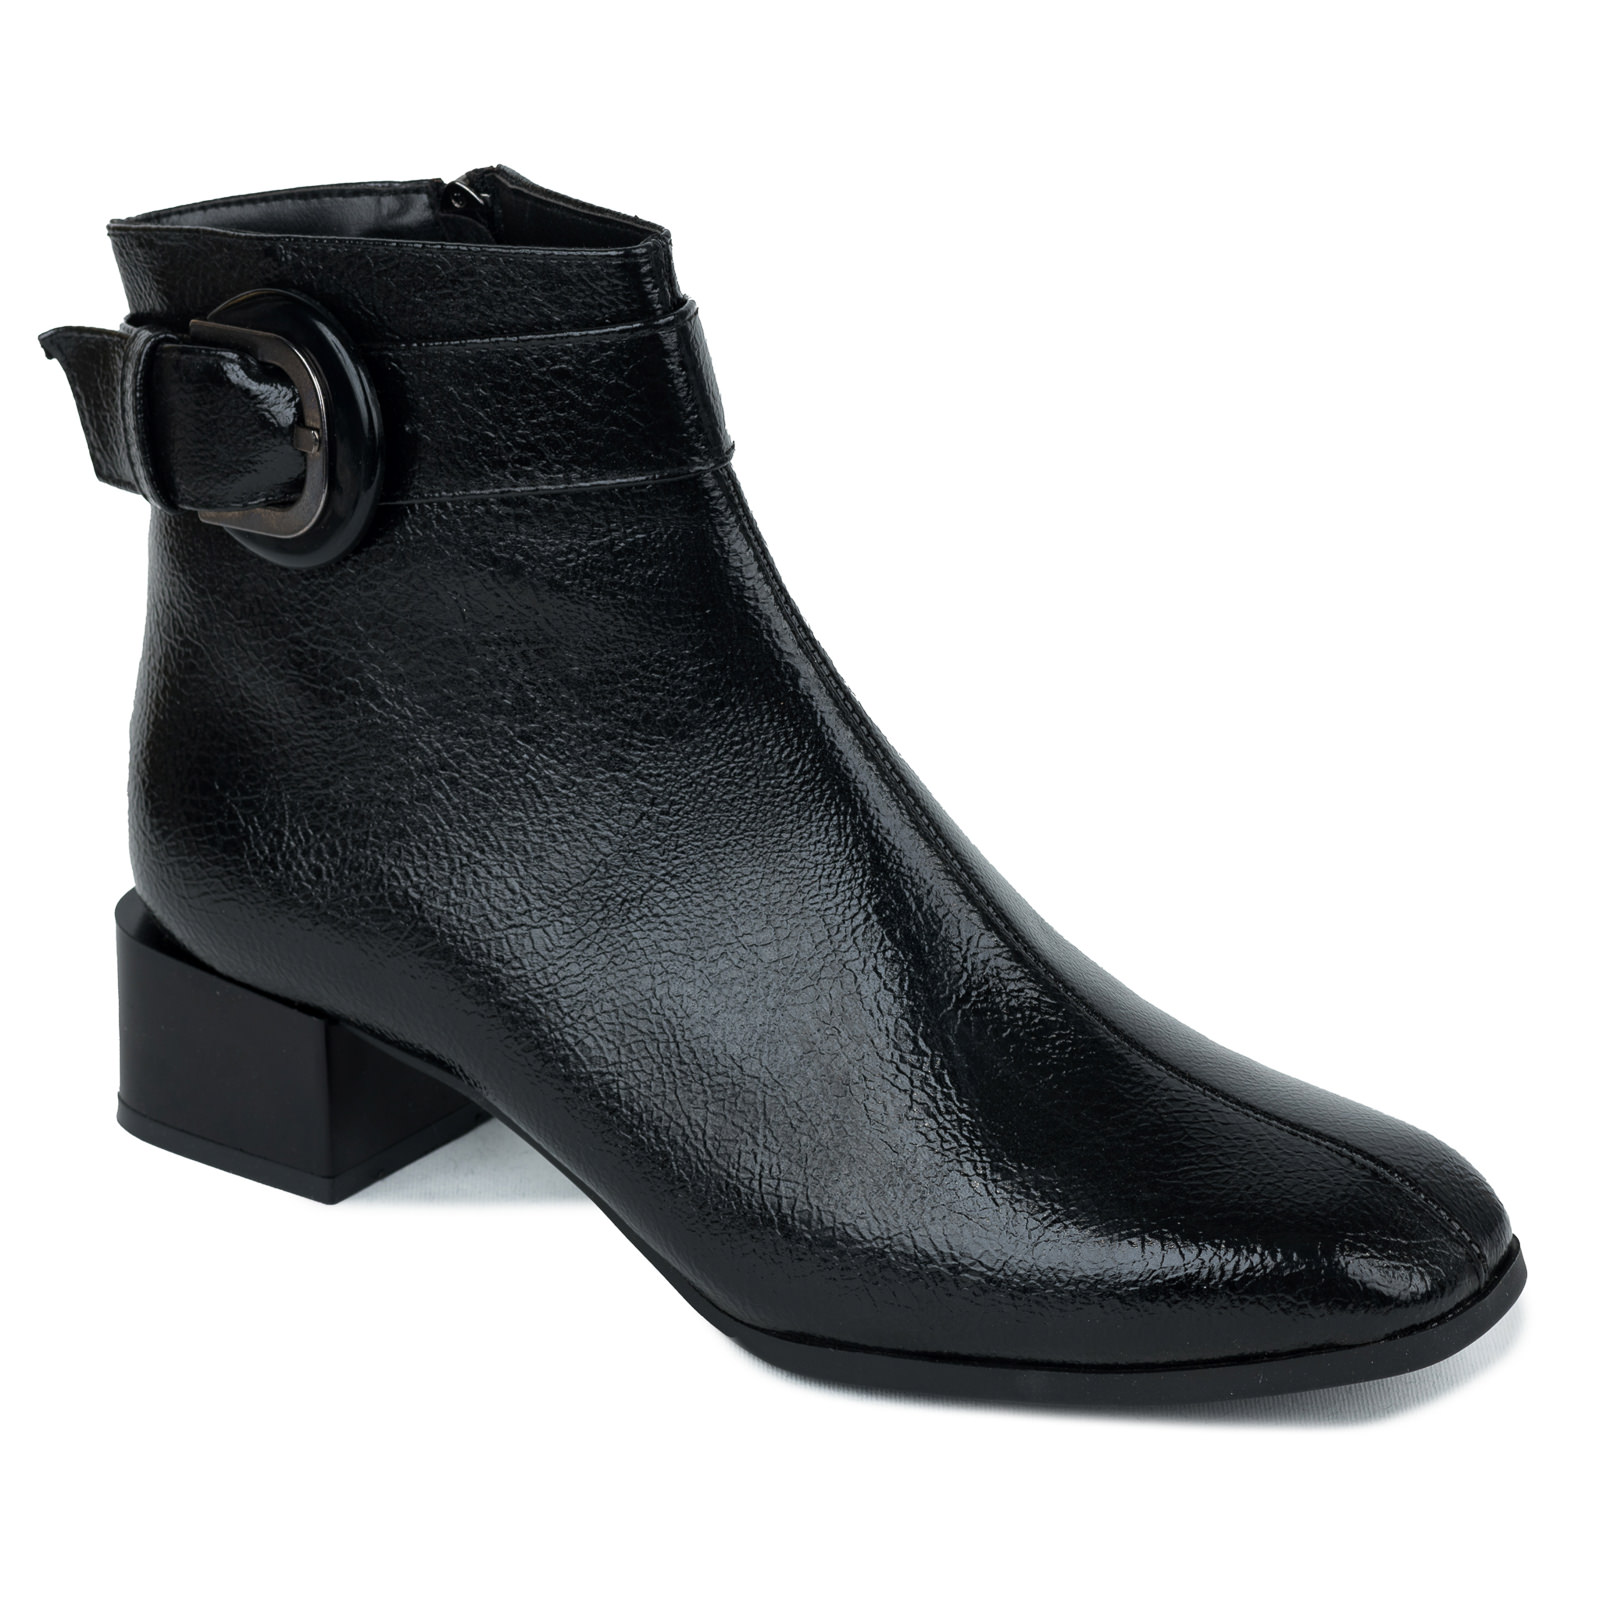 Women ankle boots B609 - BLACK